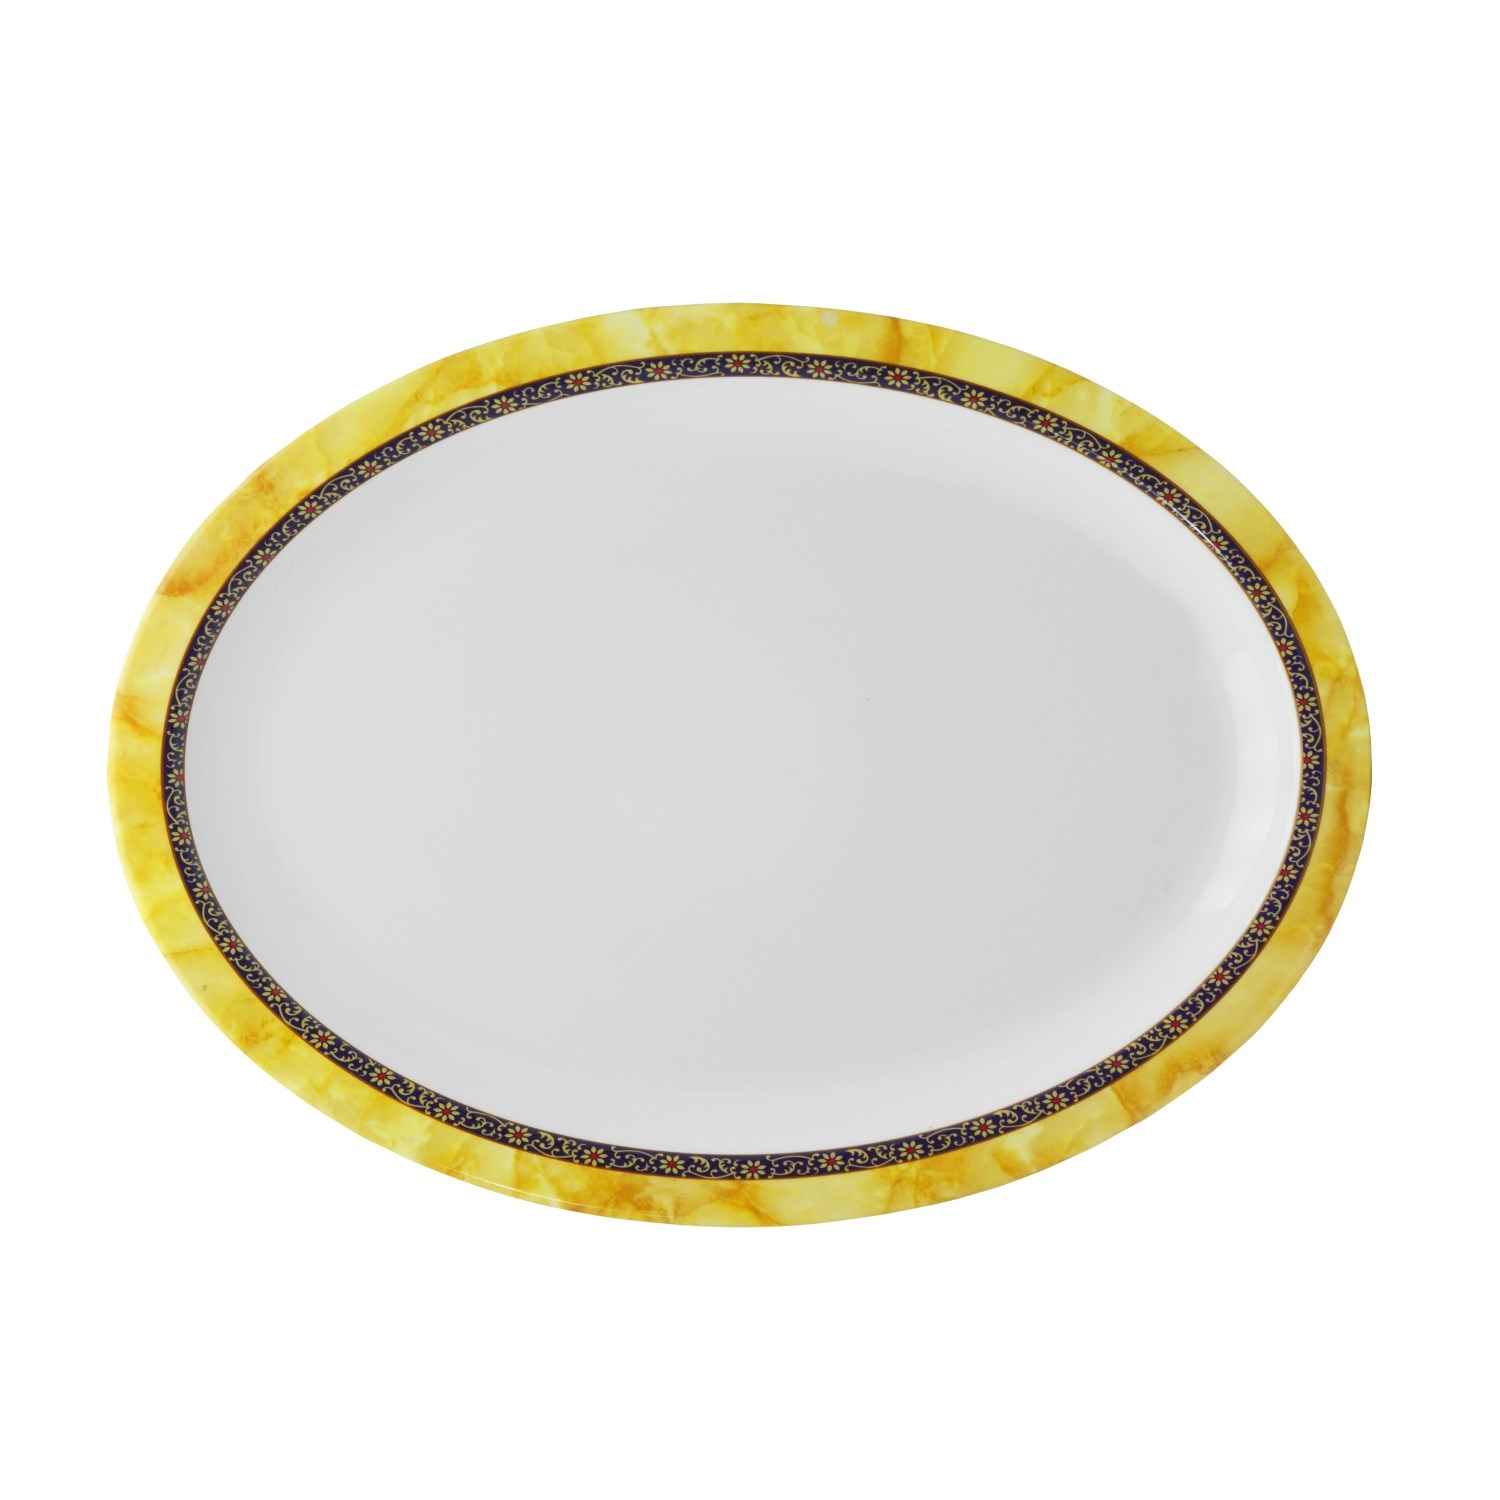 Dinewell Melamine Oval Serving Platter